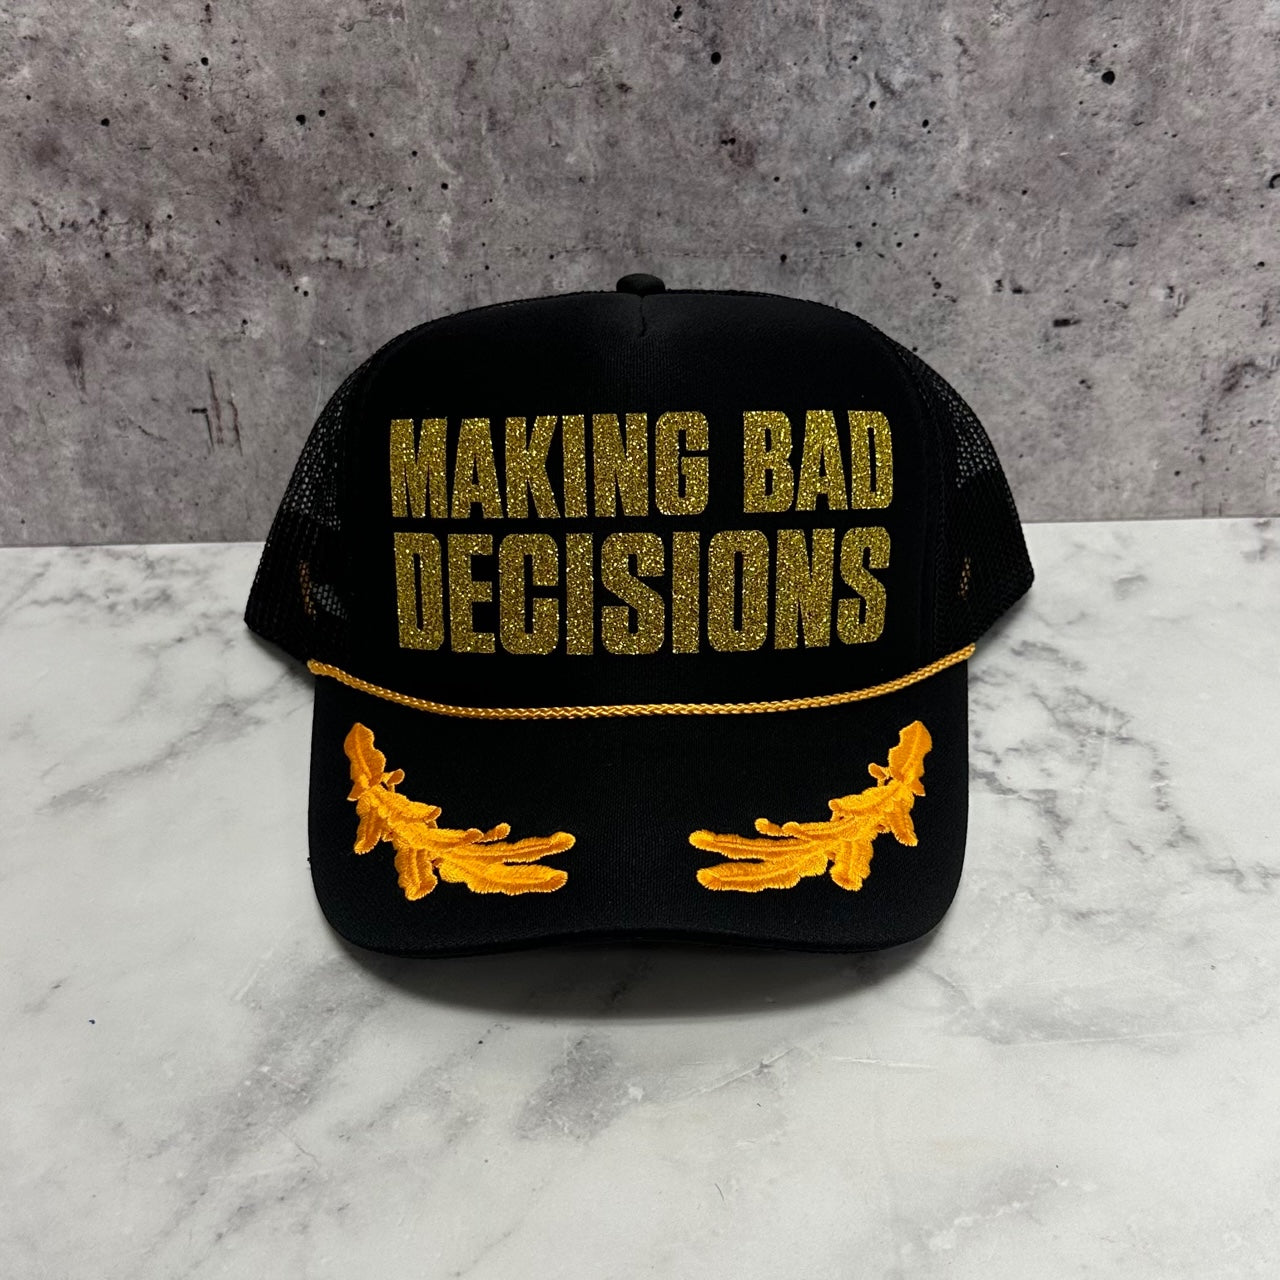 Making Bad Decisions Trucker Hat